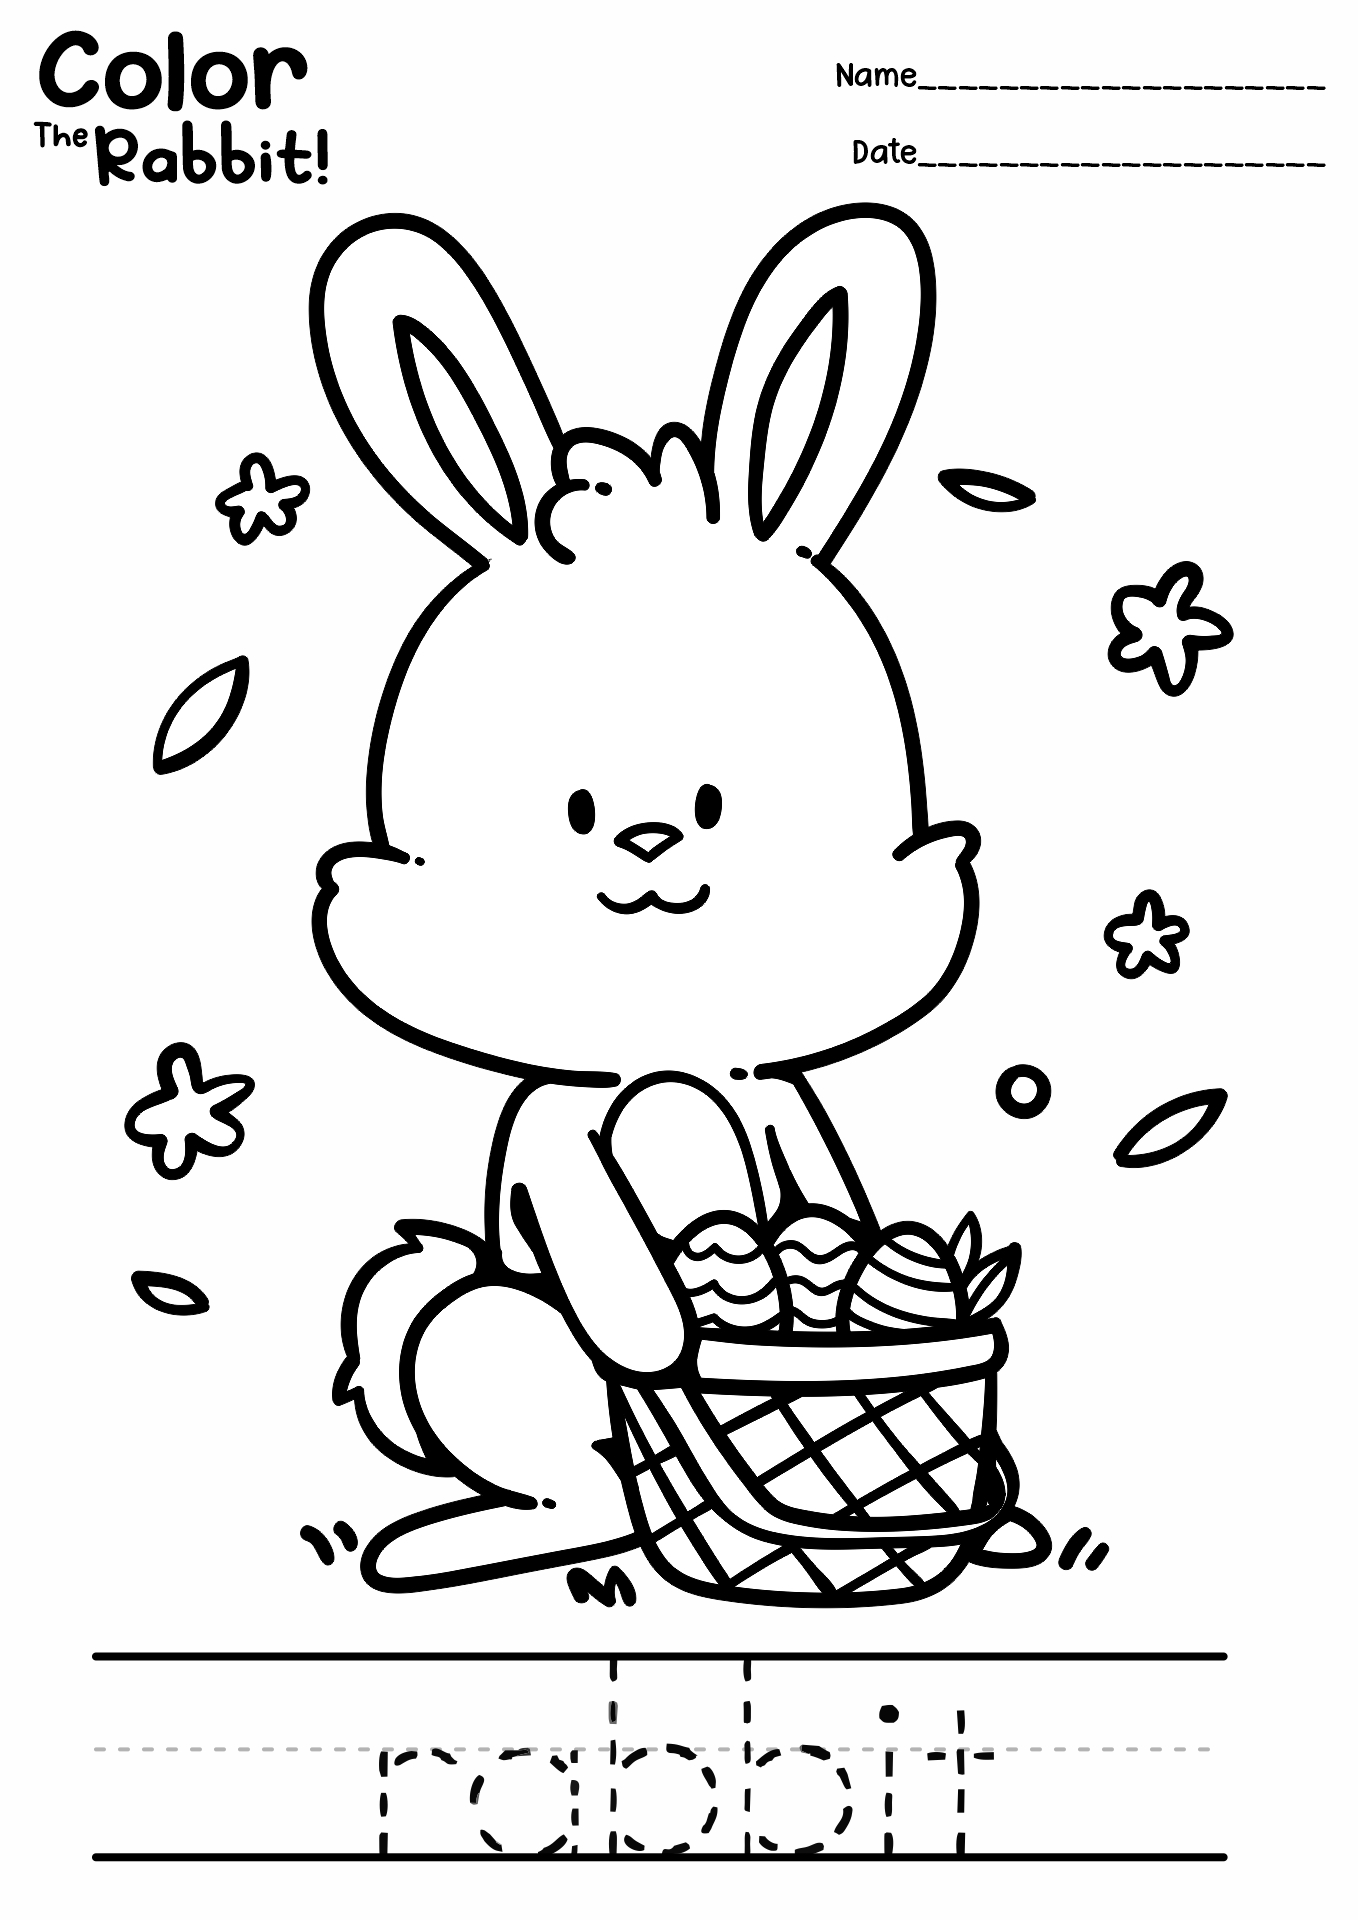 Rabbit Coloring Page Worksheet Image